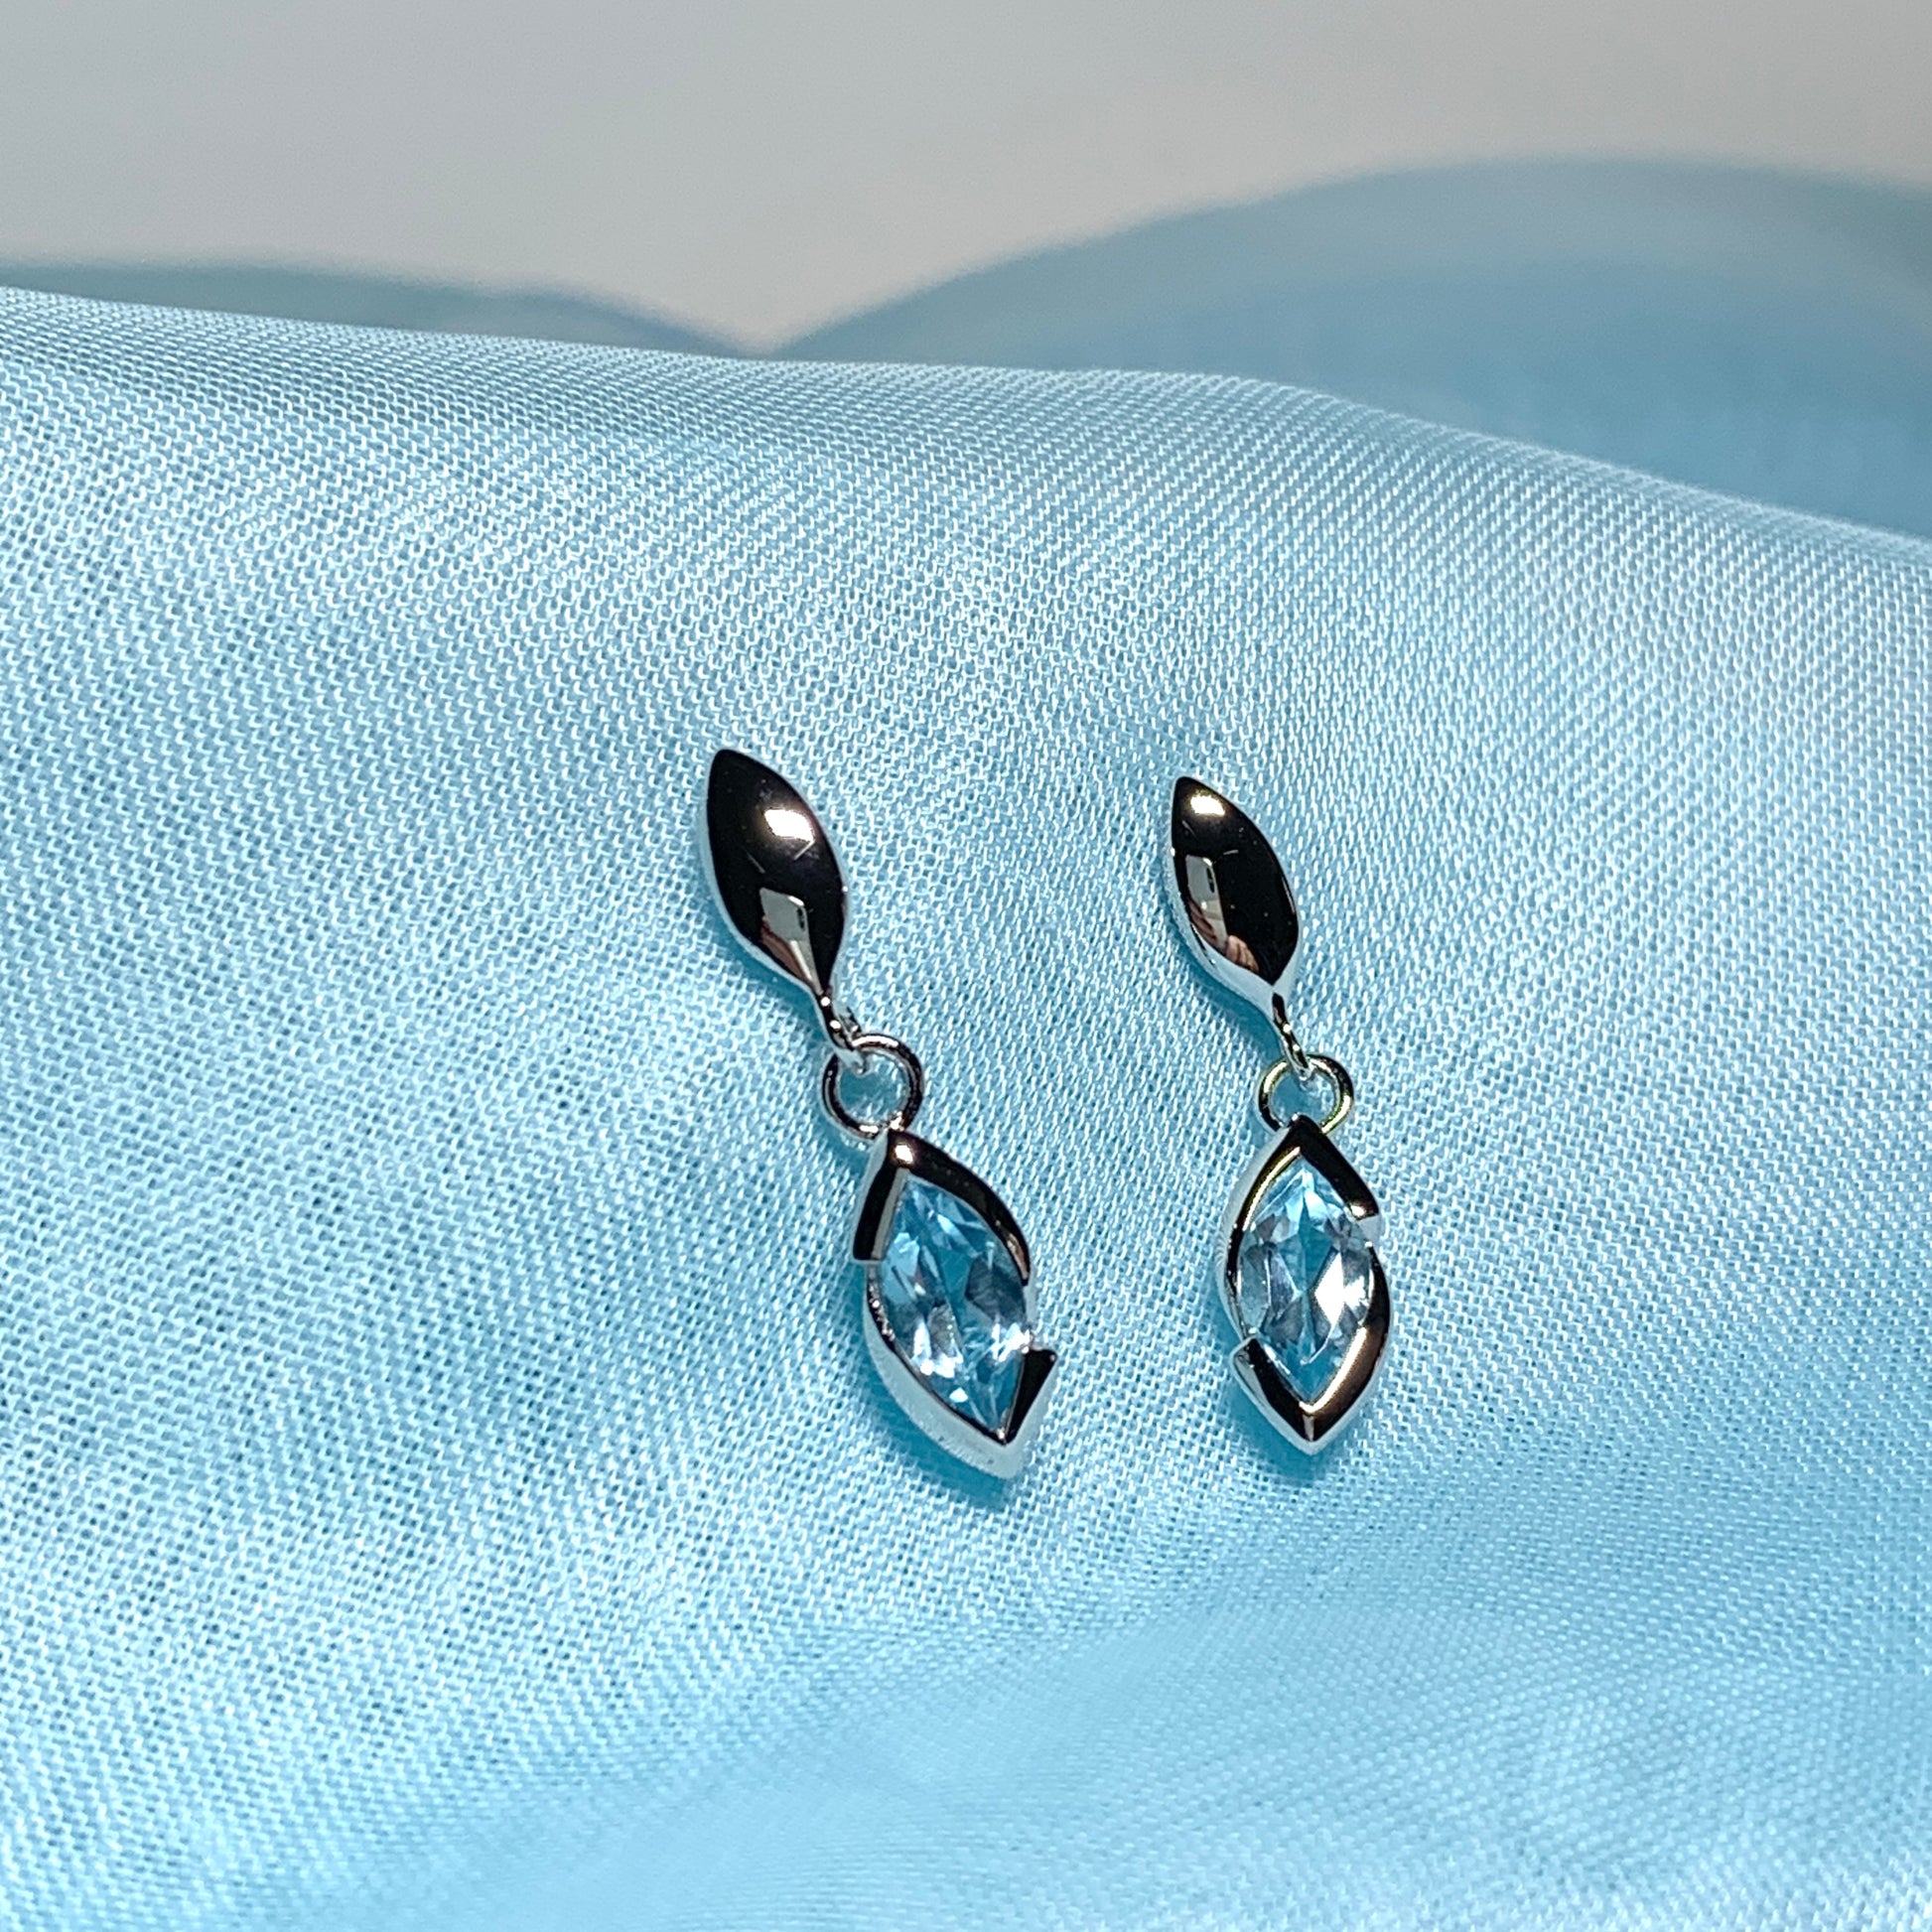 Blue topaz sterling silver marquise shaped drop earrings